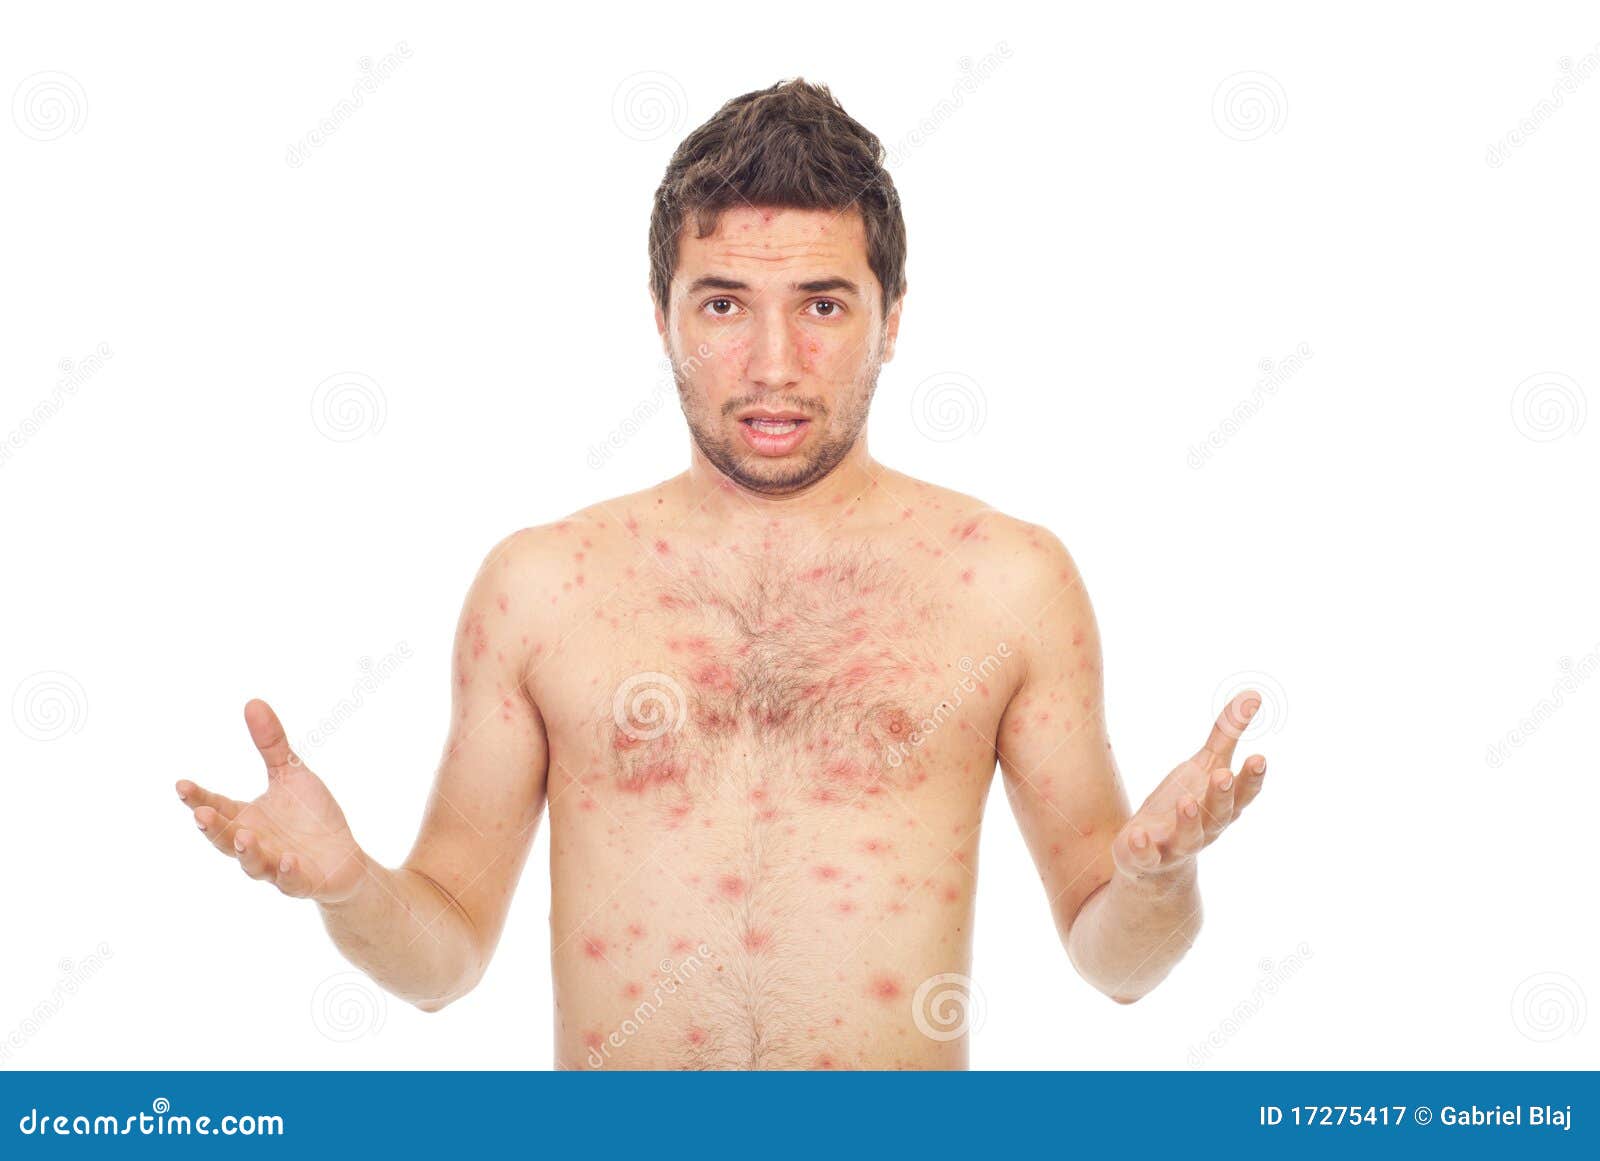 nervous-man-chickenpox-17275417.jpg